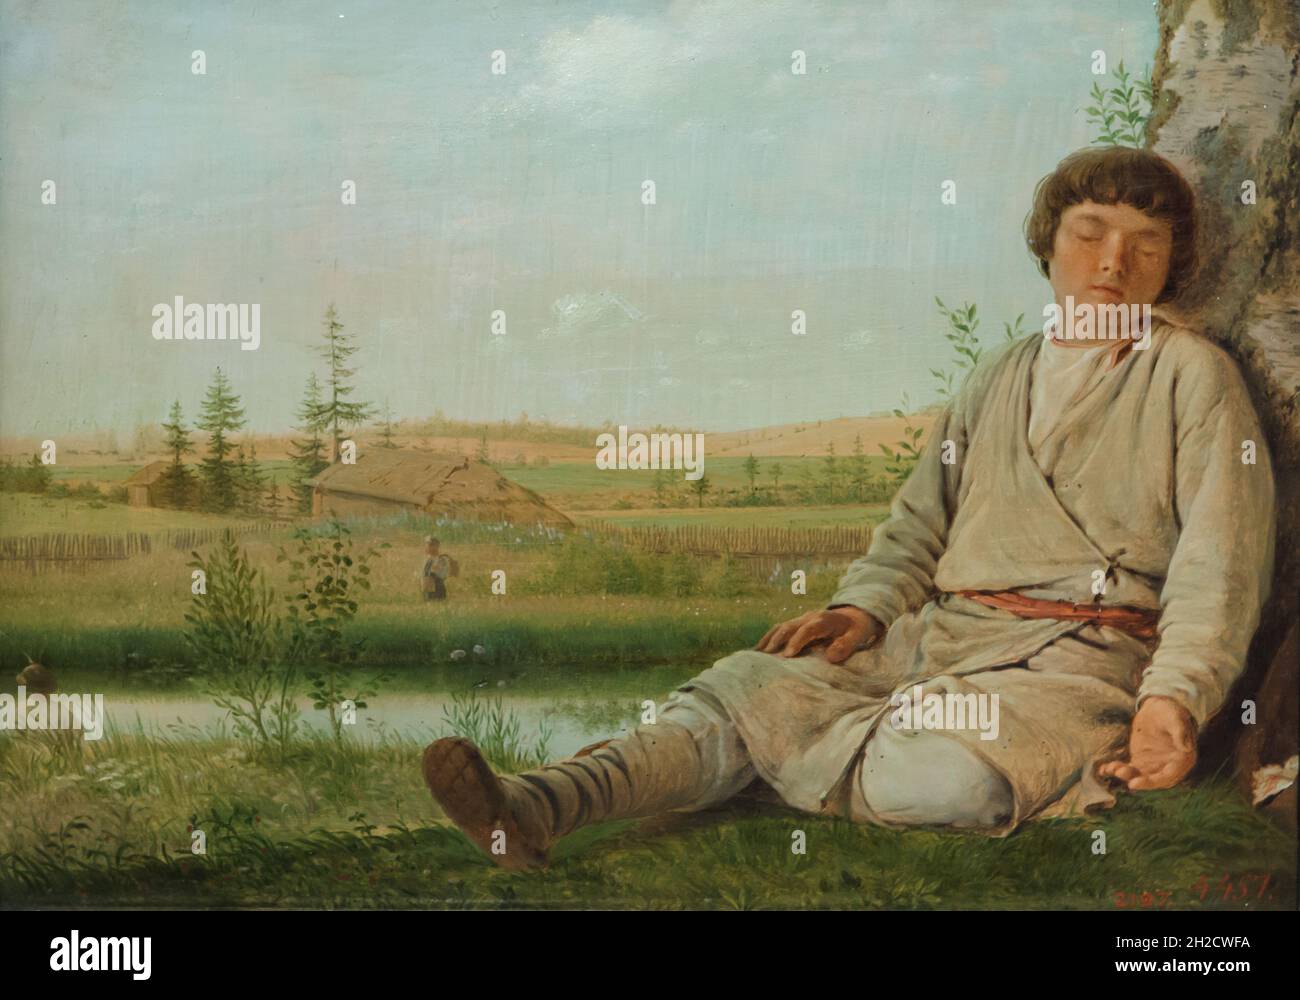 Painting 'Sleeping Shepherd Boy' by Russian Romantic painter Alexey Venetsianov (1823-1826). Stock Photo